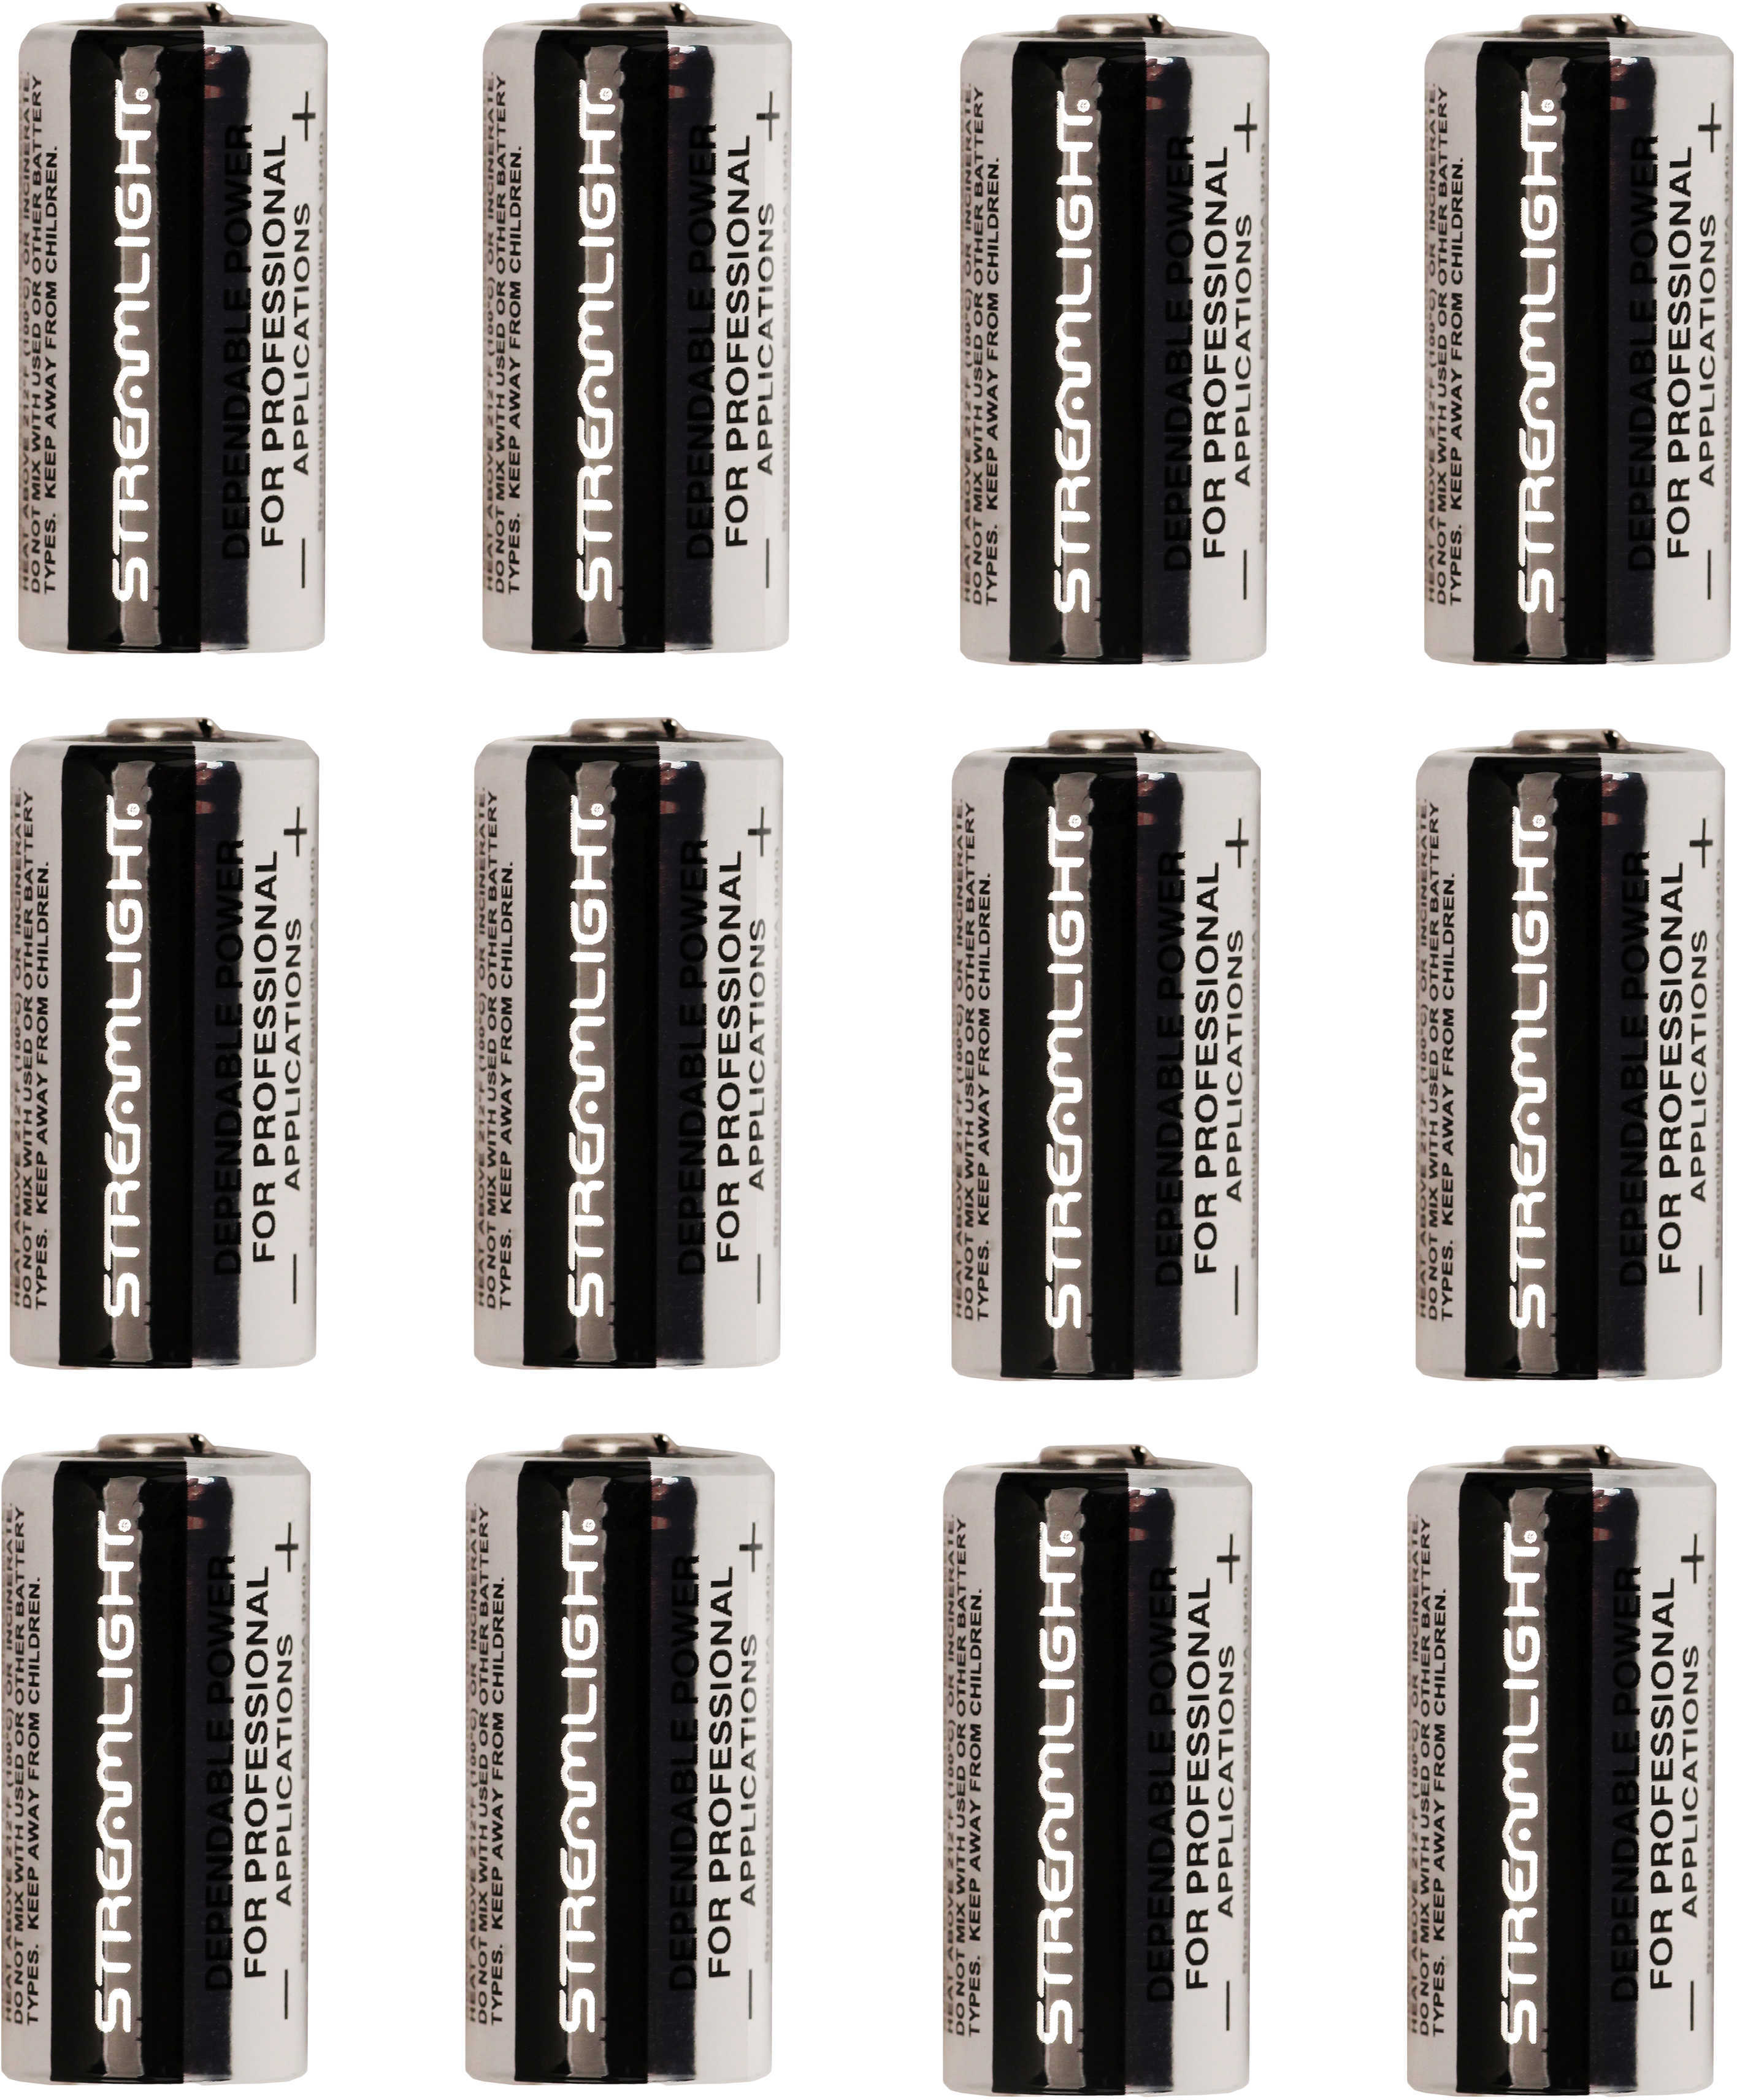 Streamlight Lithium Batteries - 12 Pack